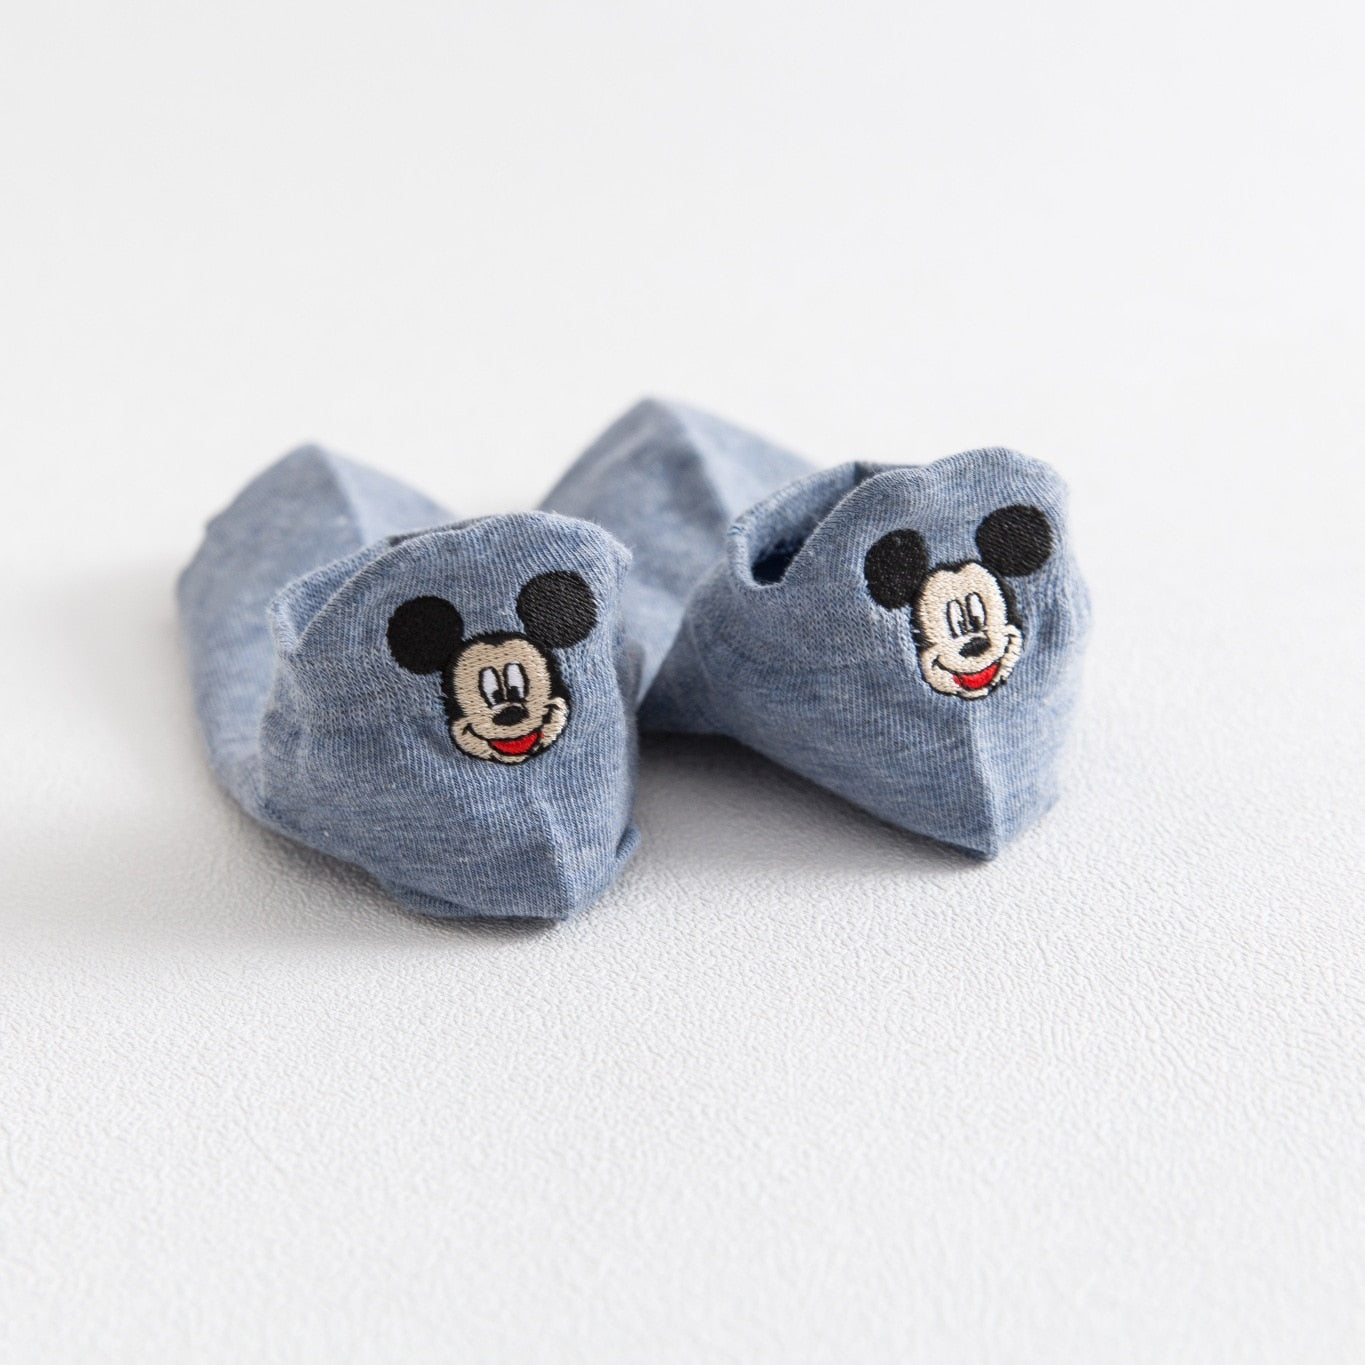 Disney embroidered women's crew socks